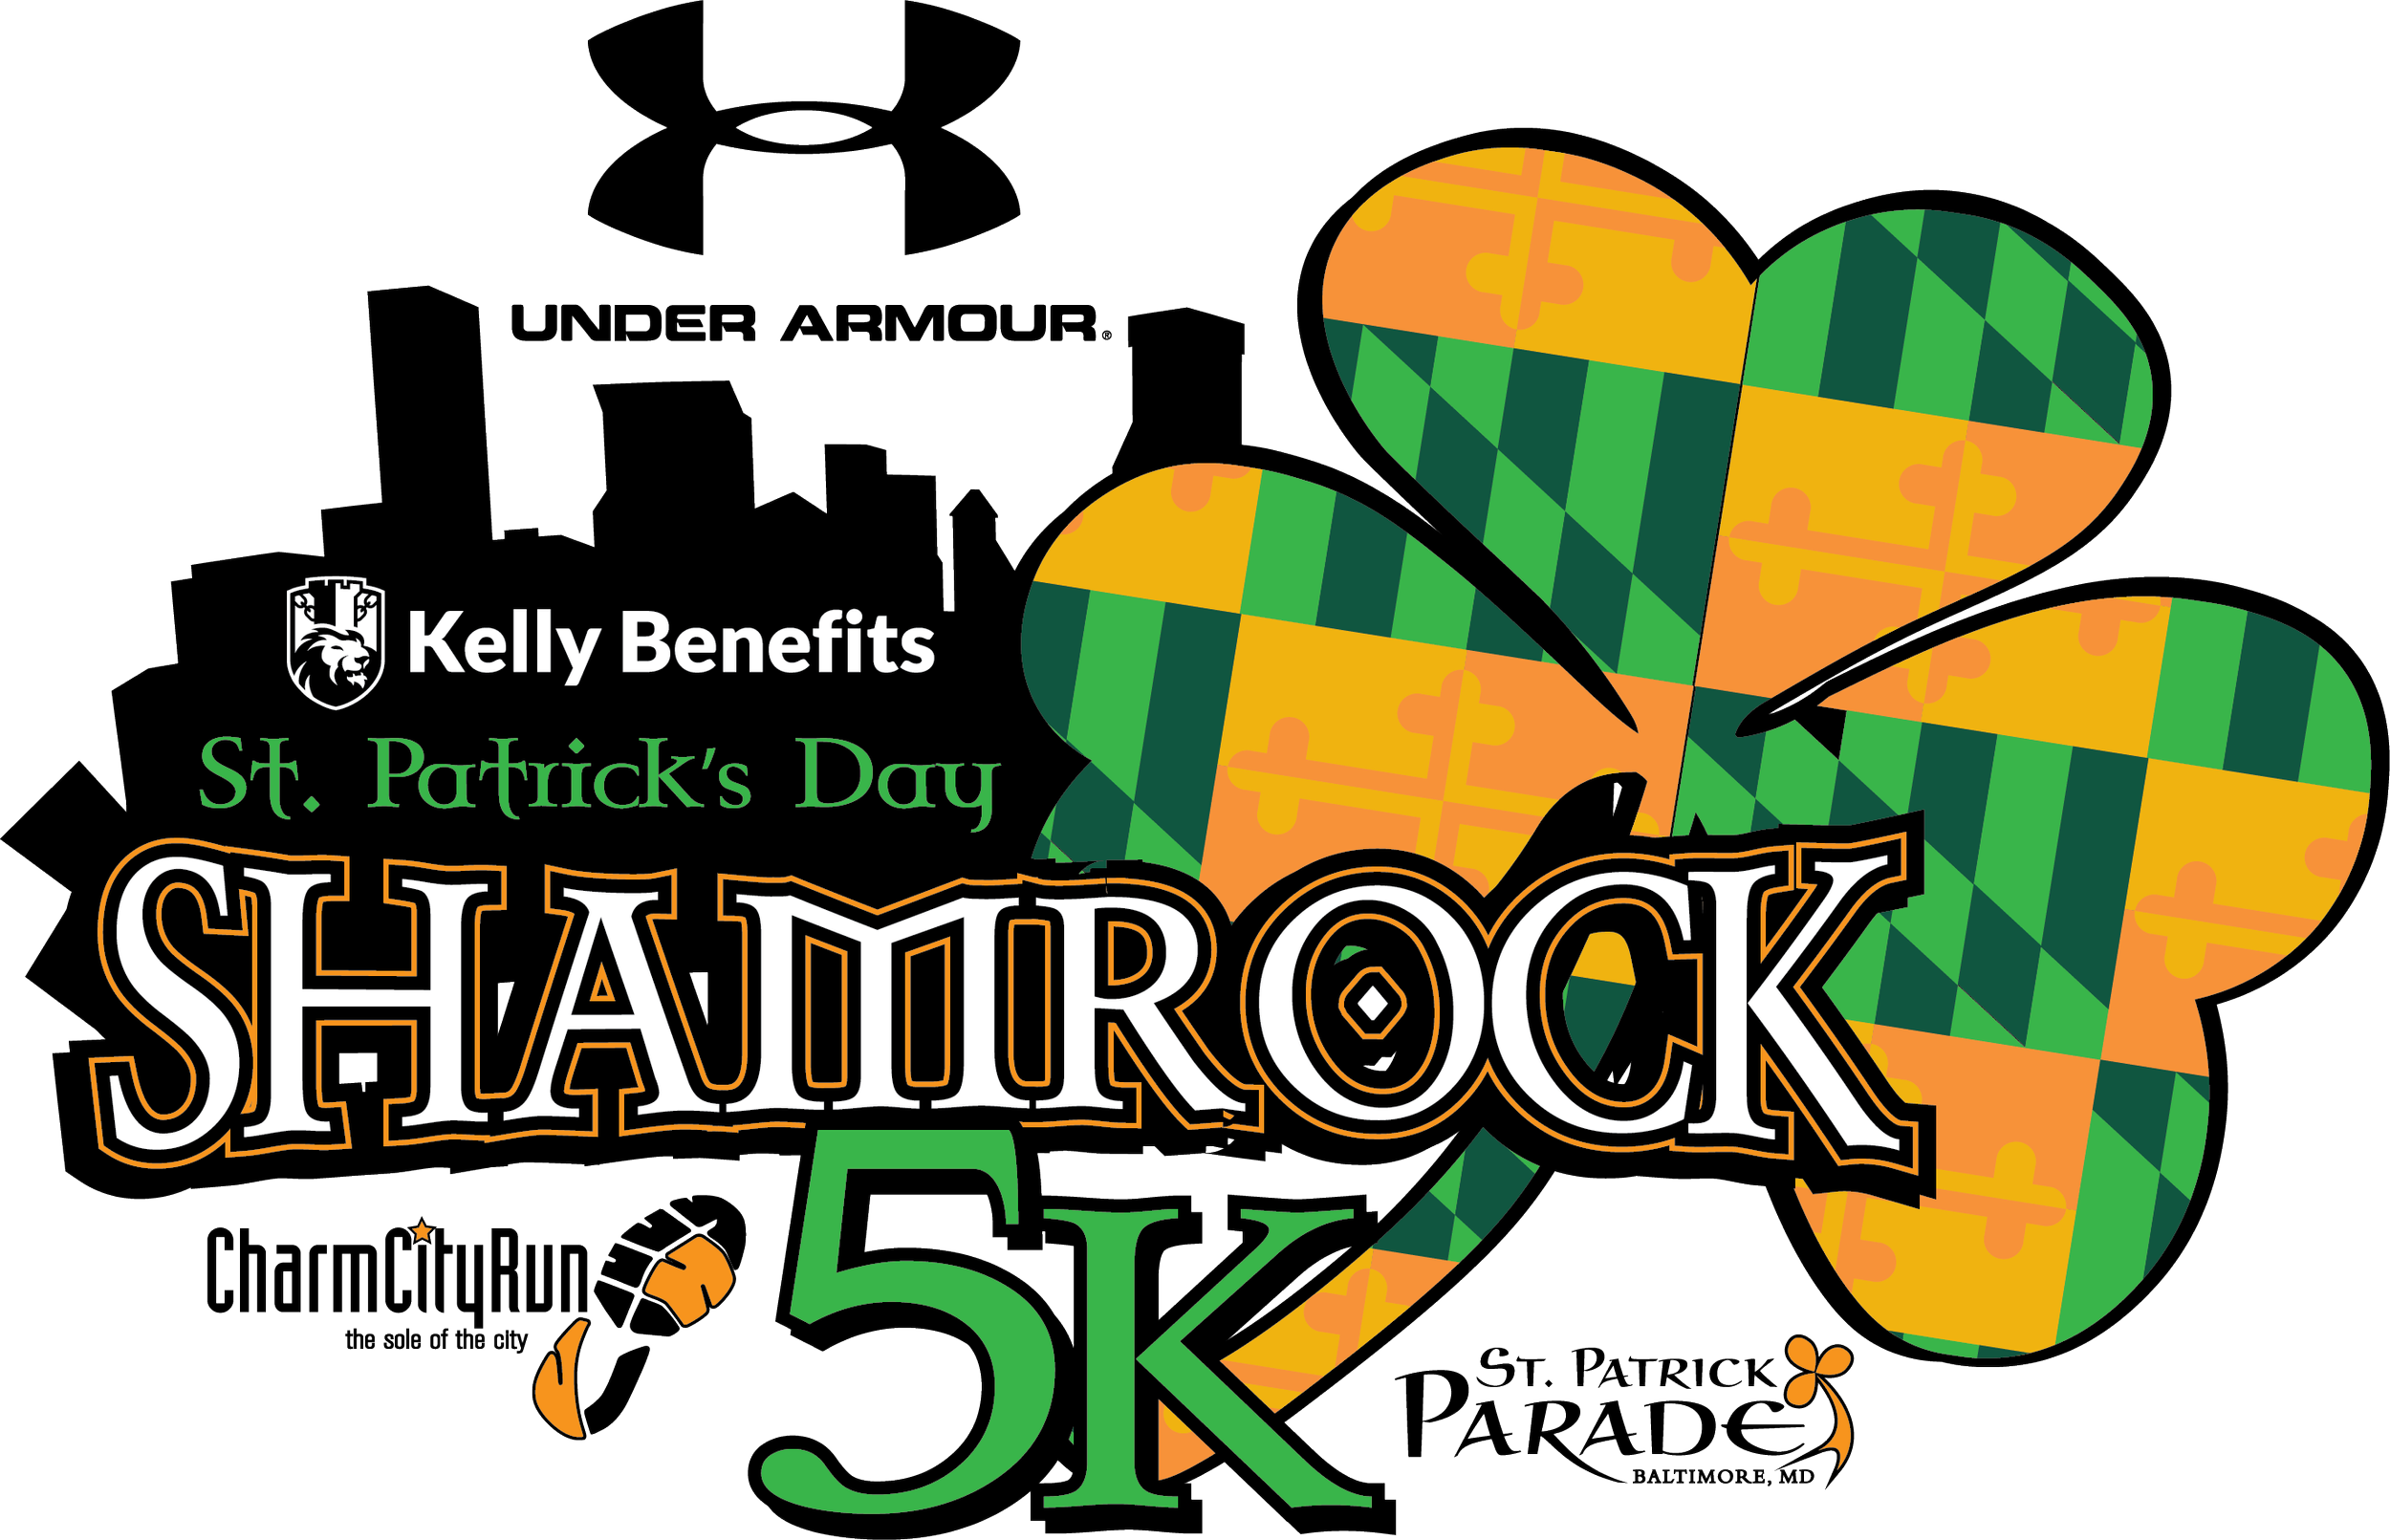 Bienes diversos Formación montar Register — Under Armour Kelly Benefits St. Patrick's Day Shamrock 5K